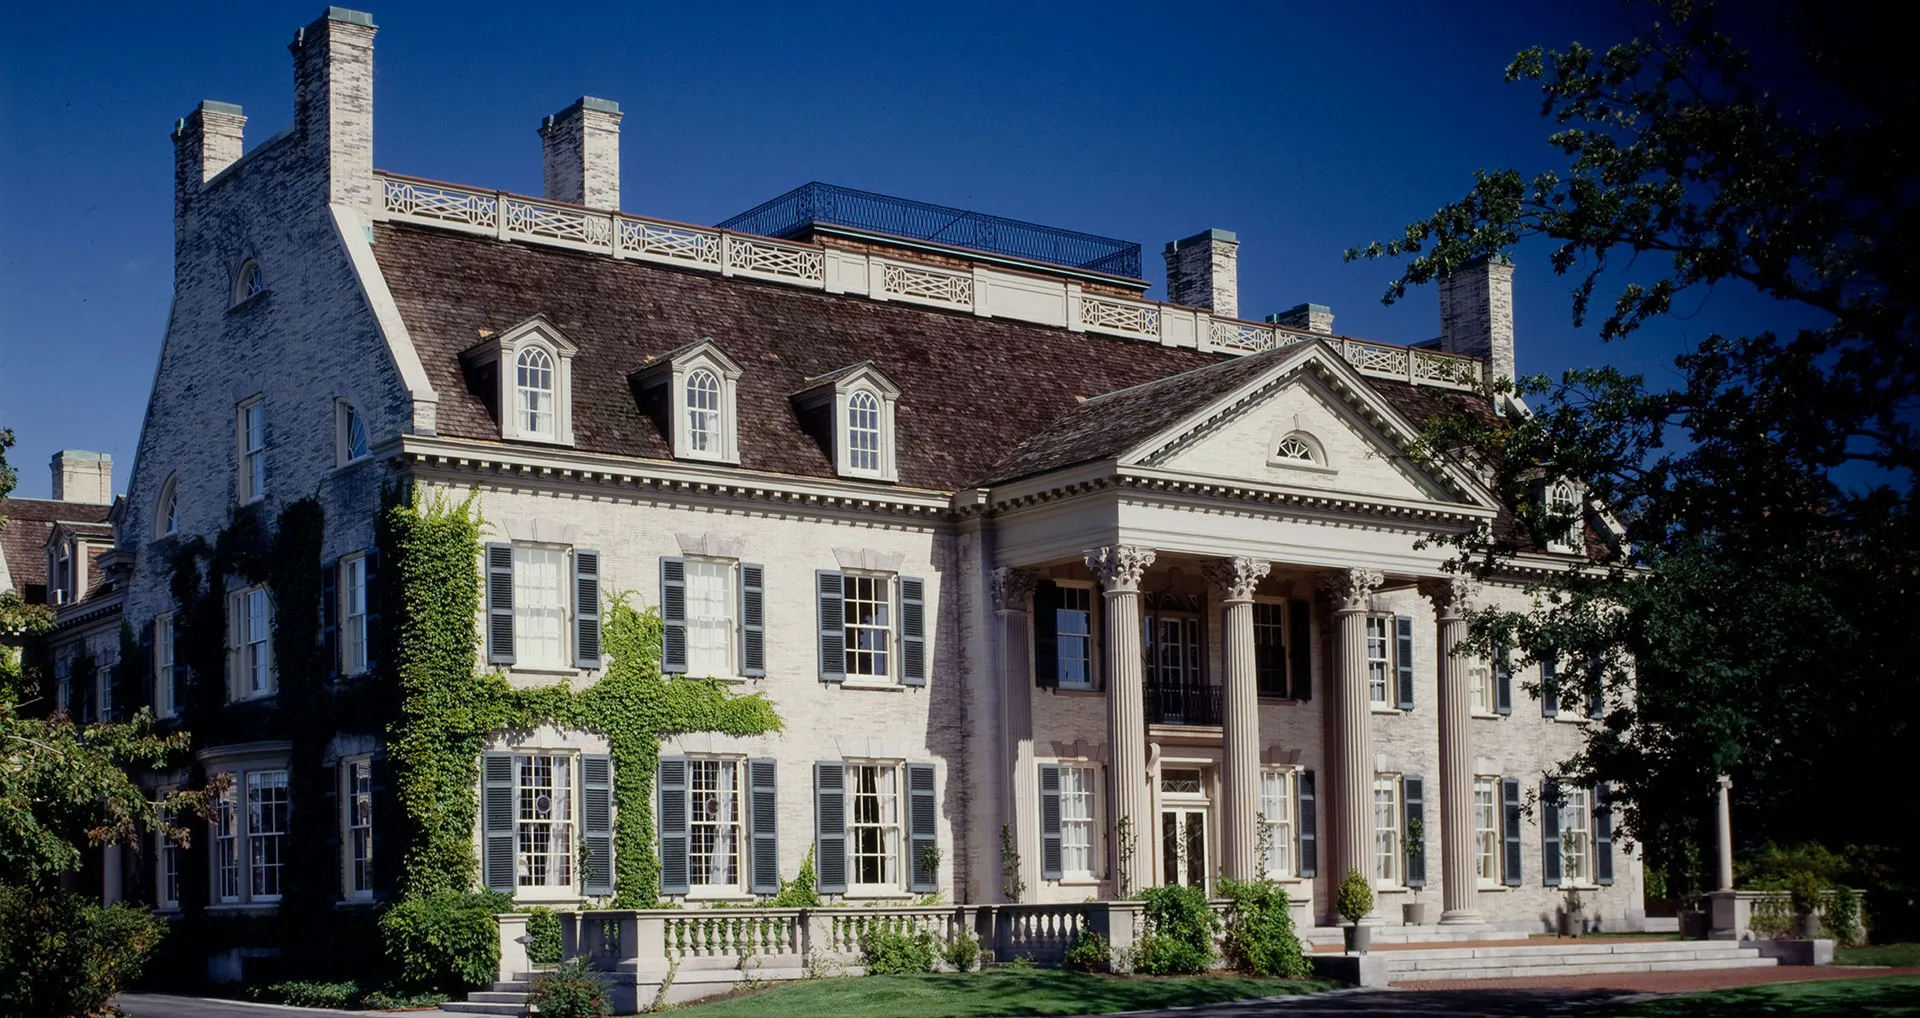 George Eastman's historic mansion